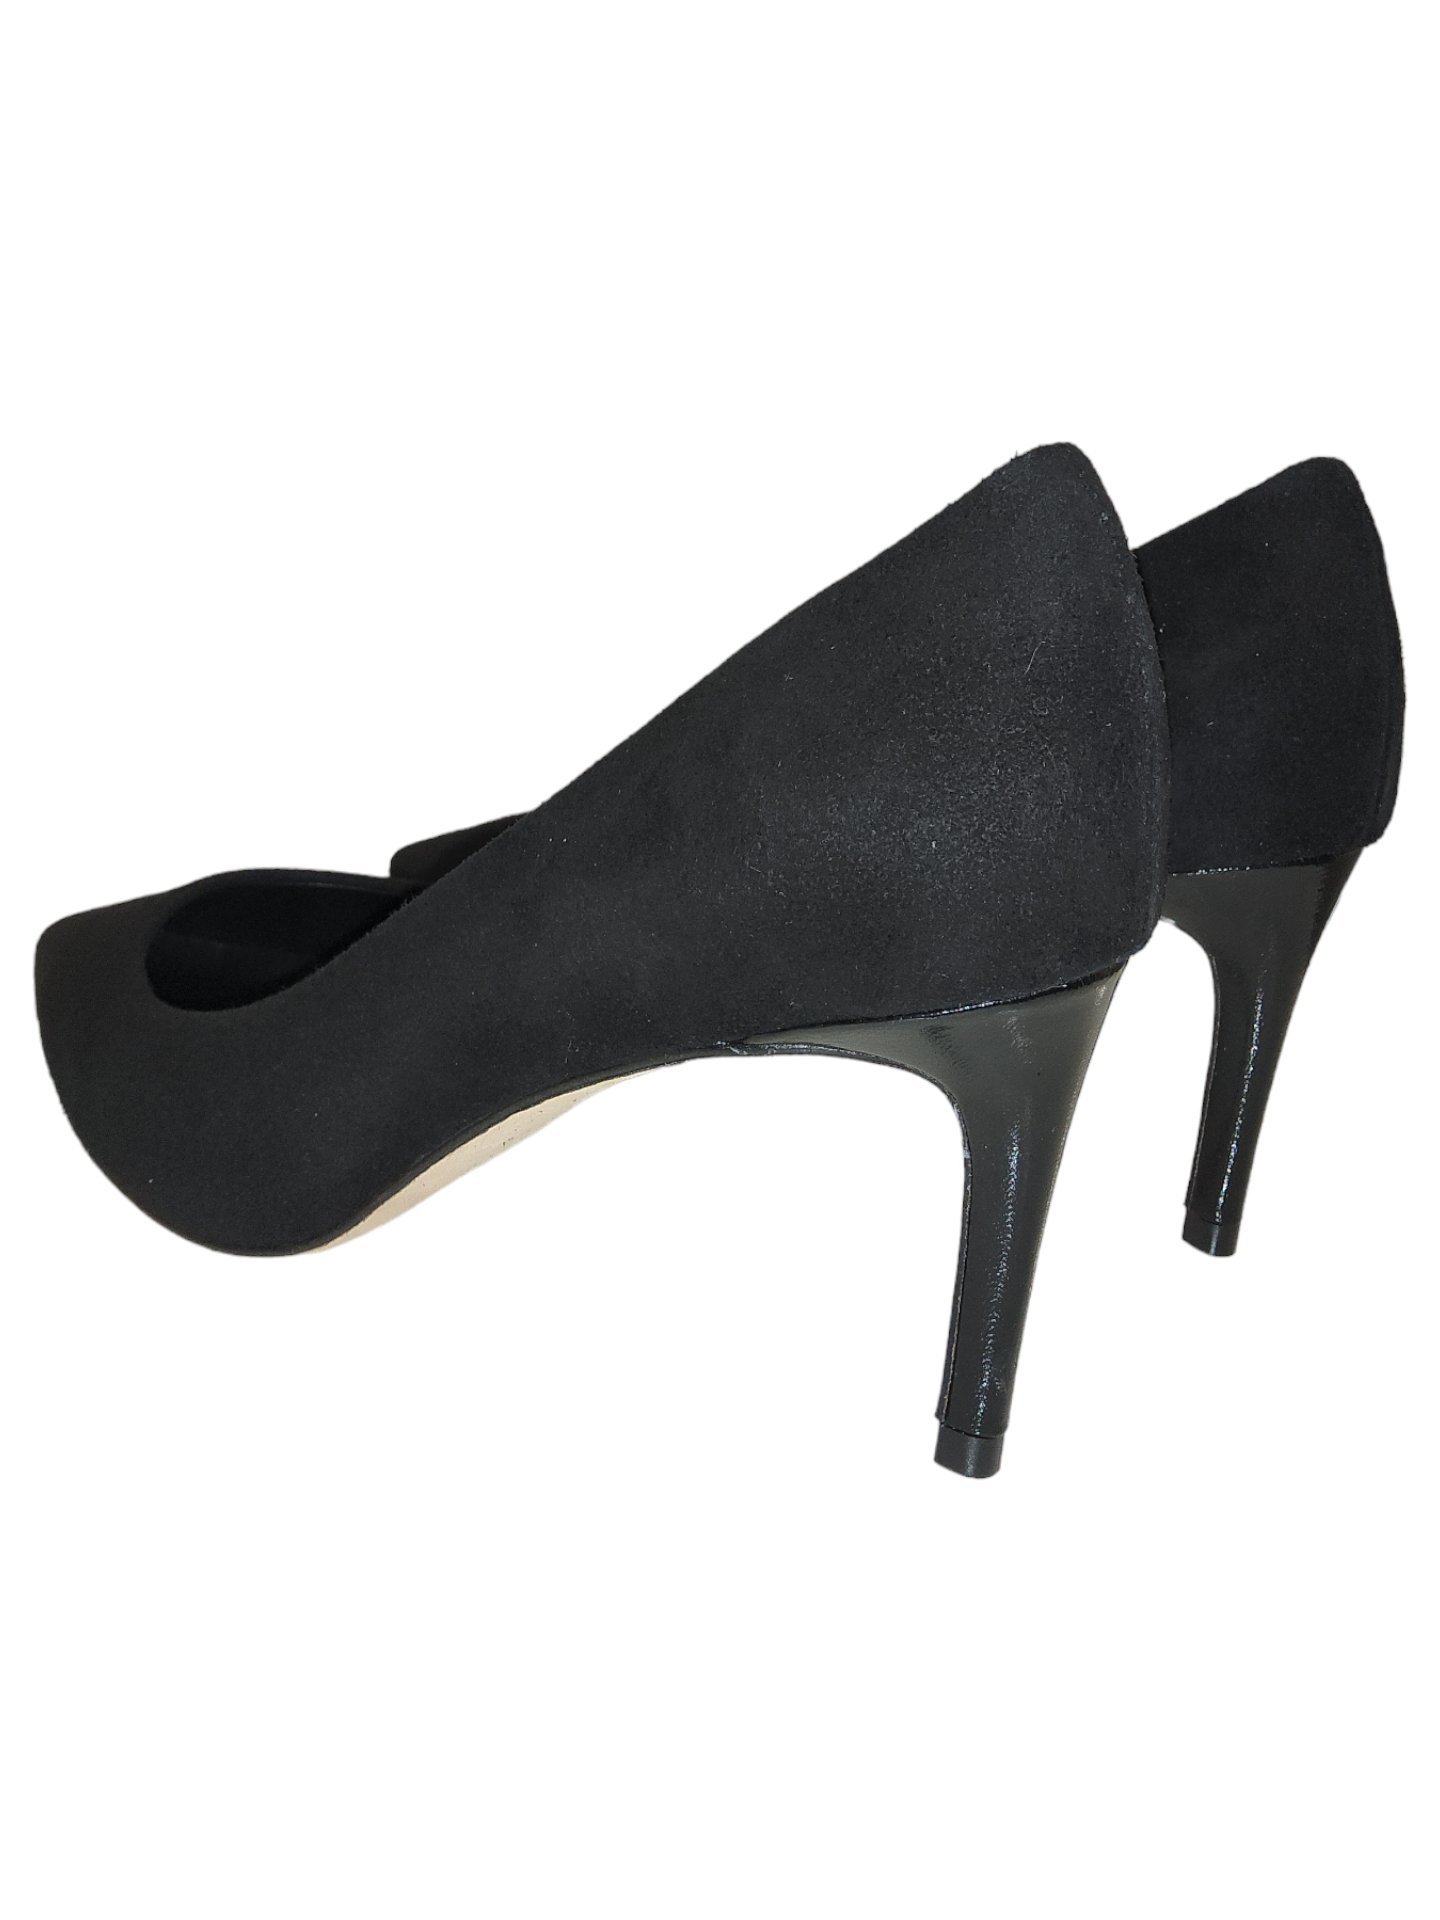 Black leather court shoe